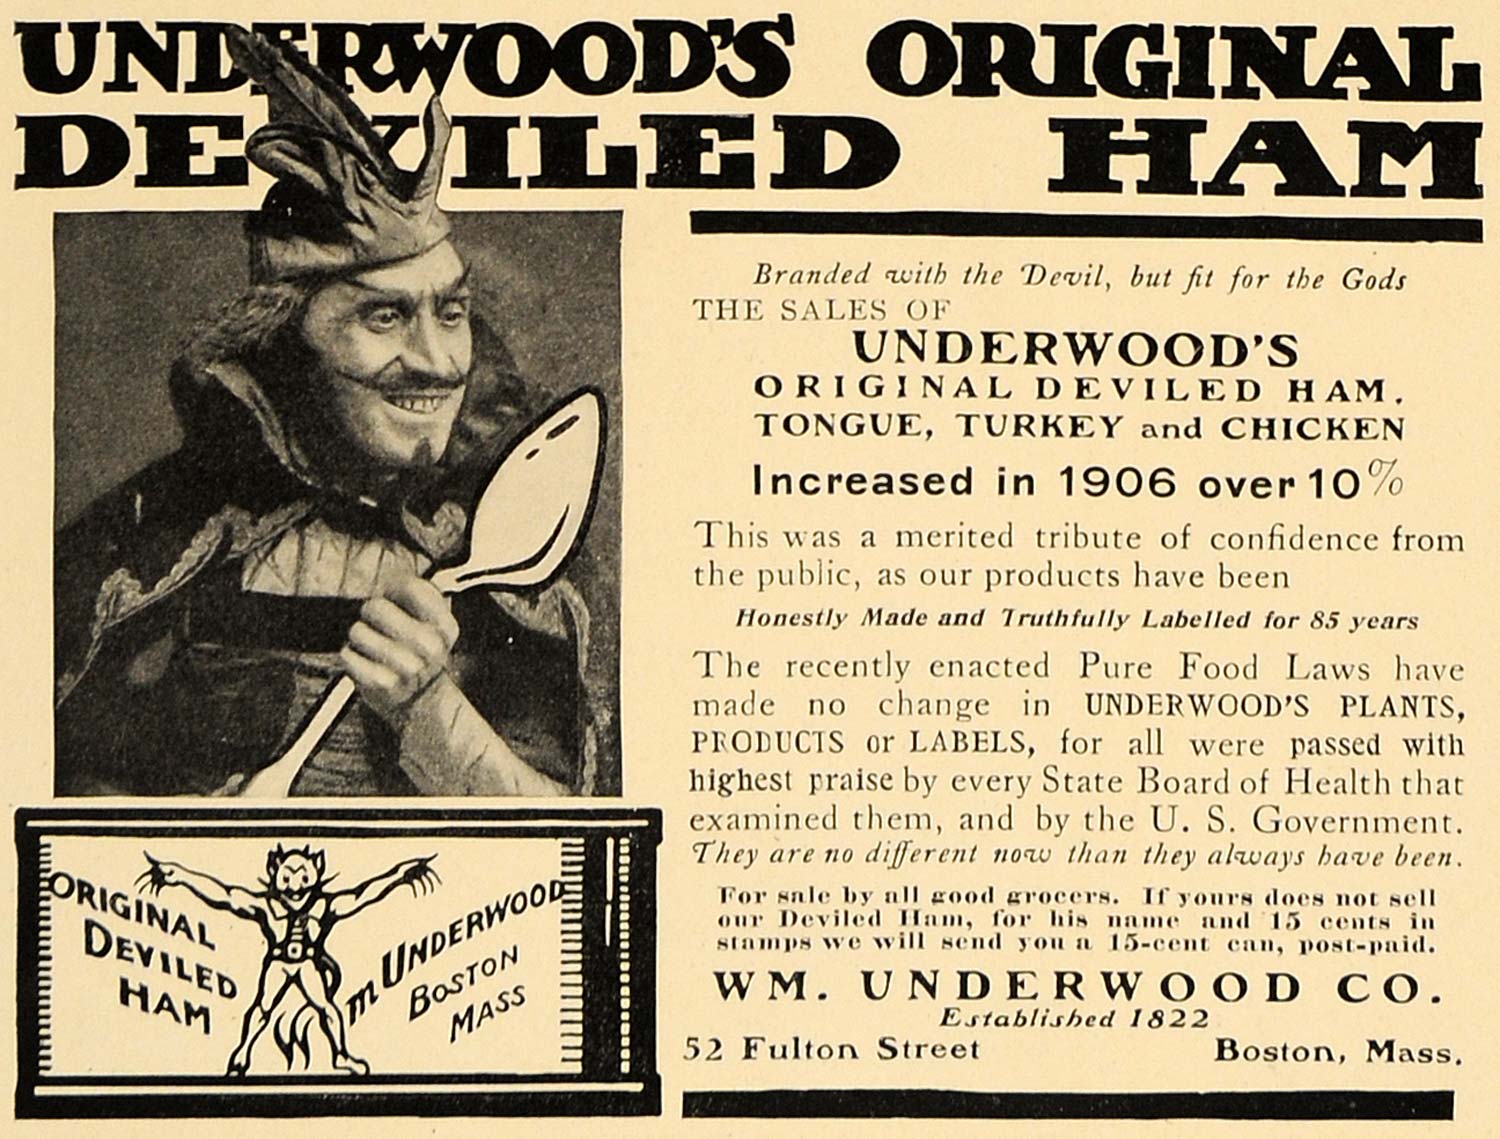 1907 Ad Underwood's Deviled Meat Tongue Turkey Chicken - ORIGINAL CL4